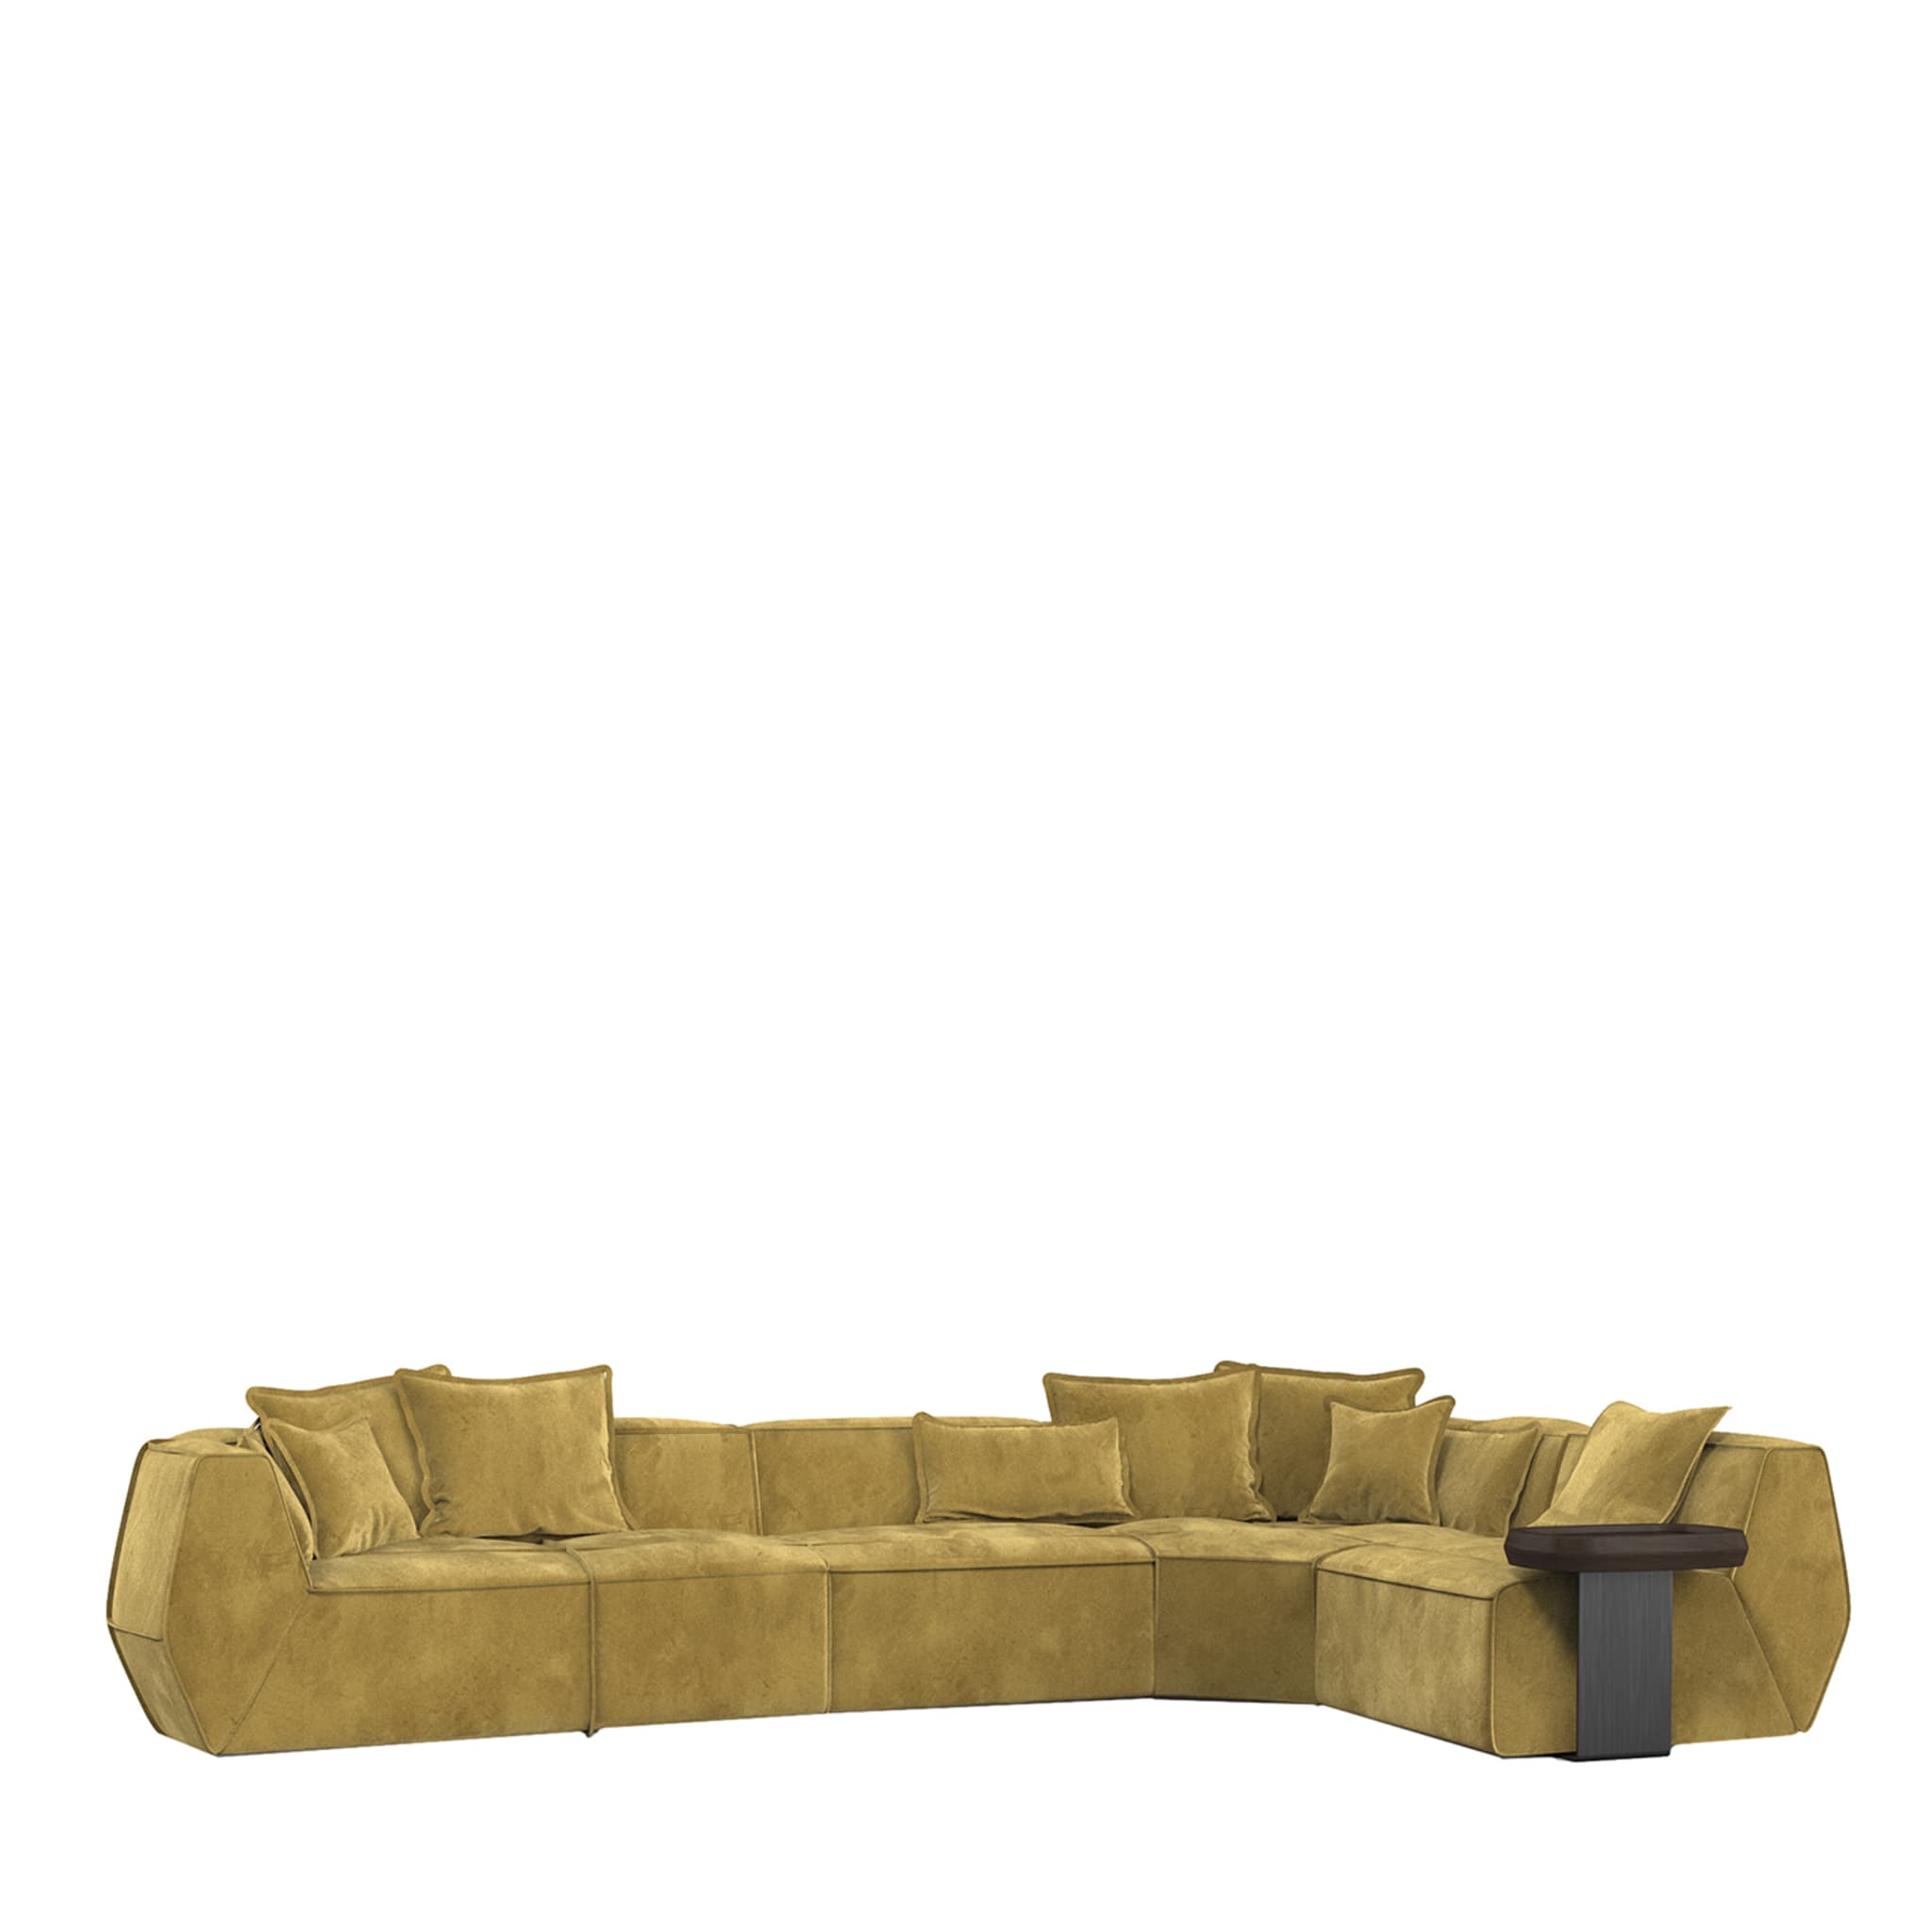 Infinito Acid Green Leather Sofa by Lorenza Bozzoli - Main view